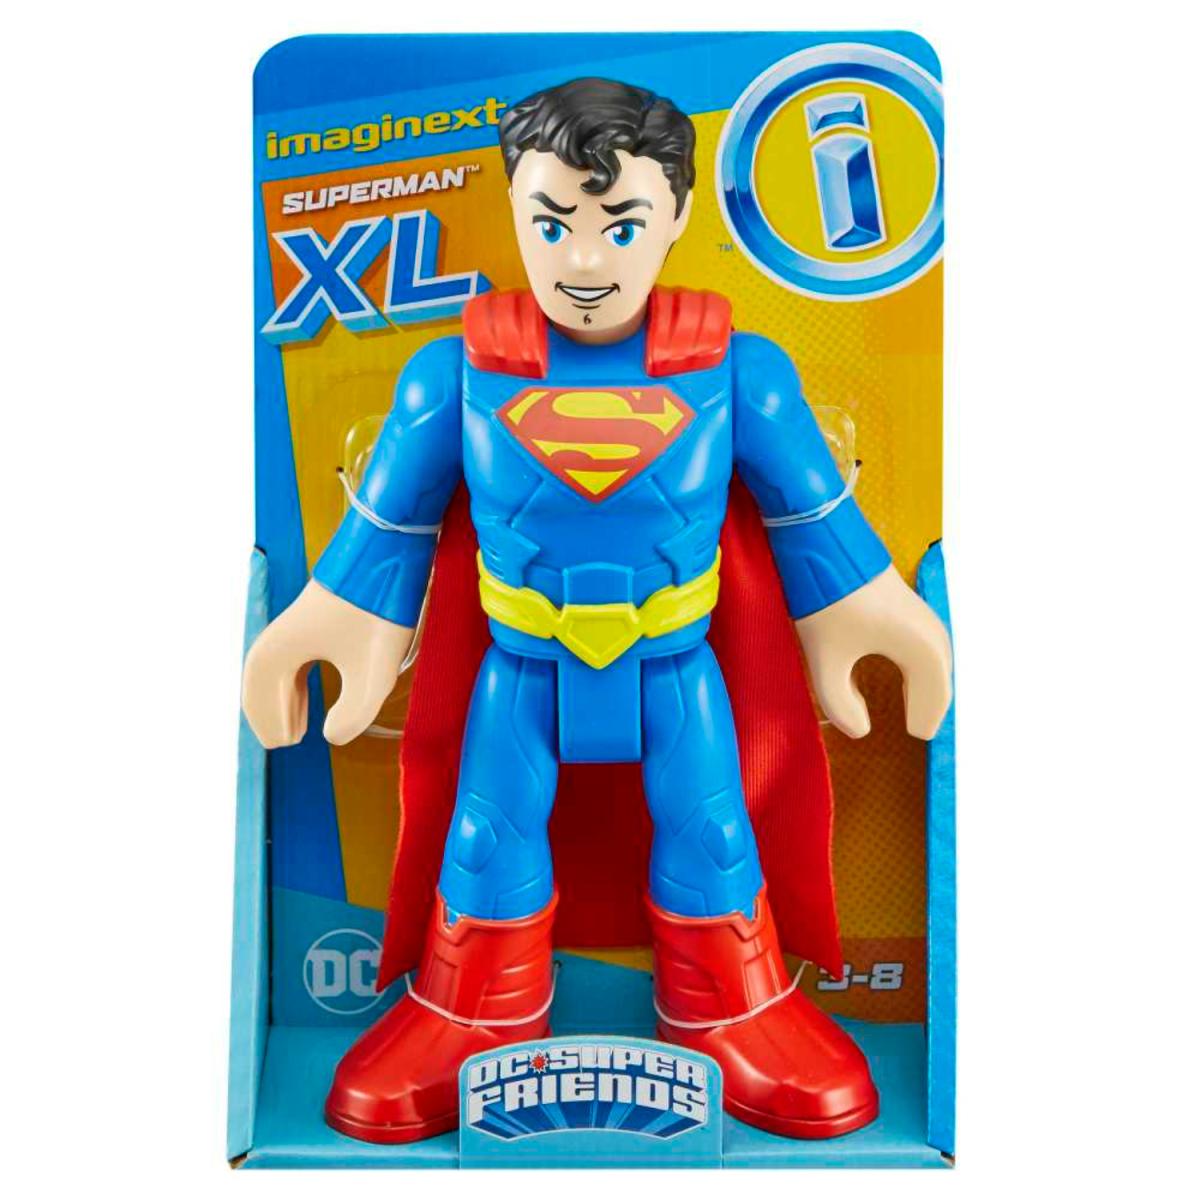 F-P IMAGINEXT DCSF SUPERMAN XL